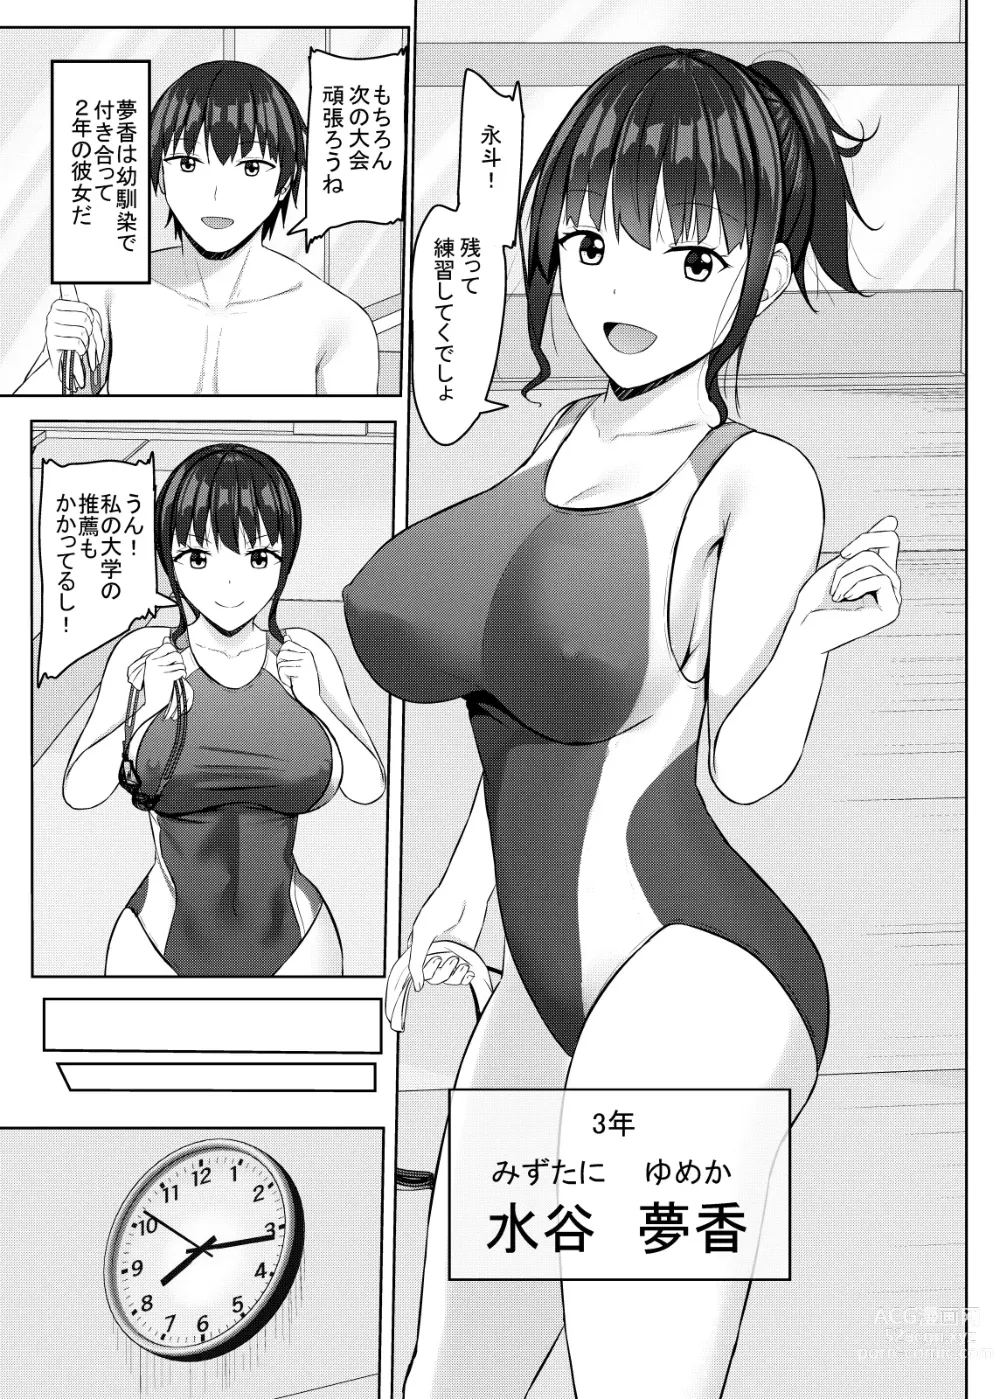 Page 4 of doujinshi 寝取られjk幼馴染水泳部